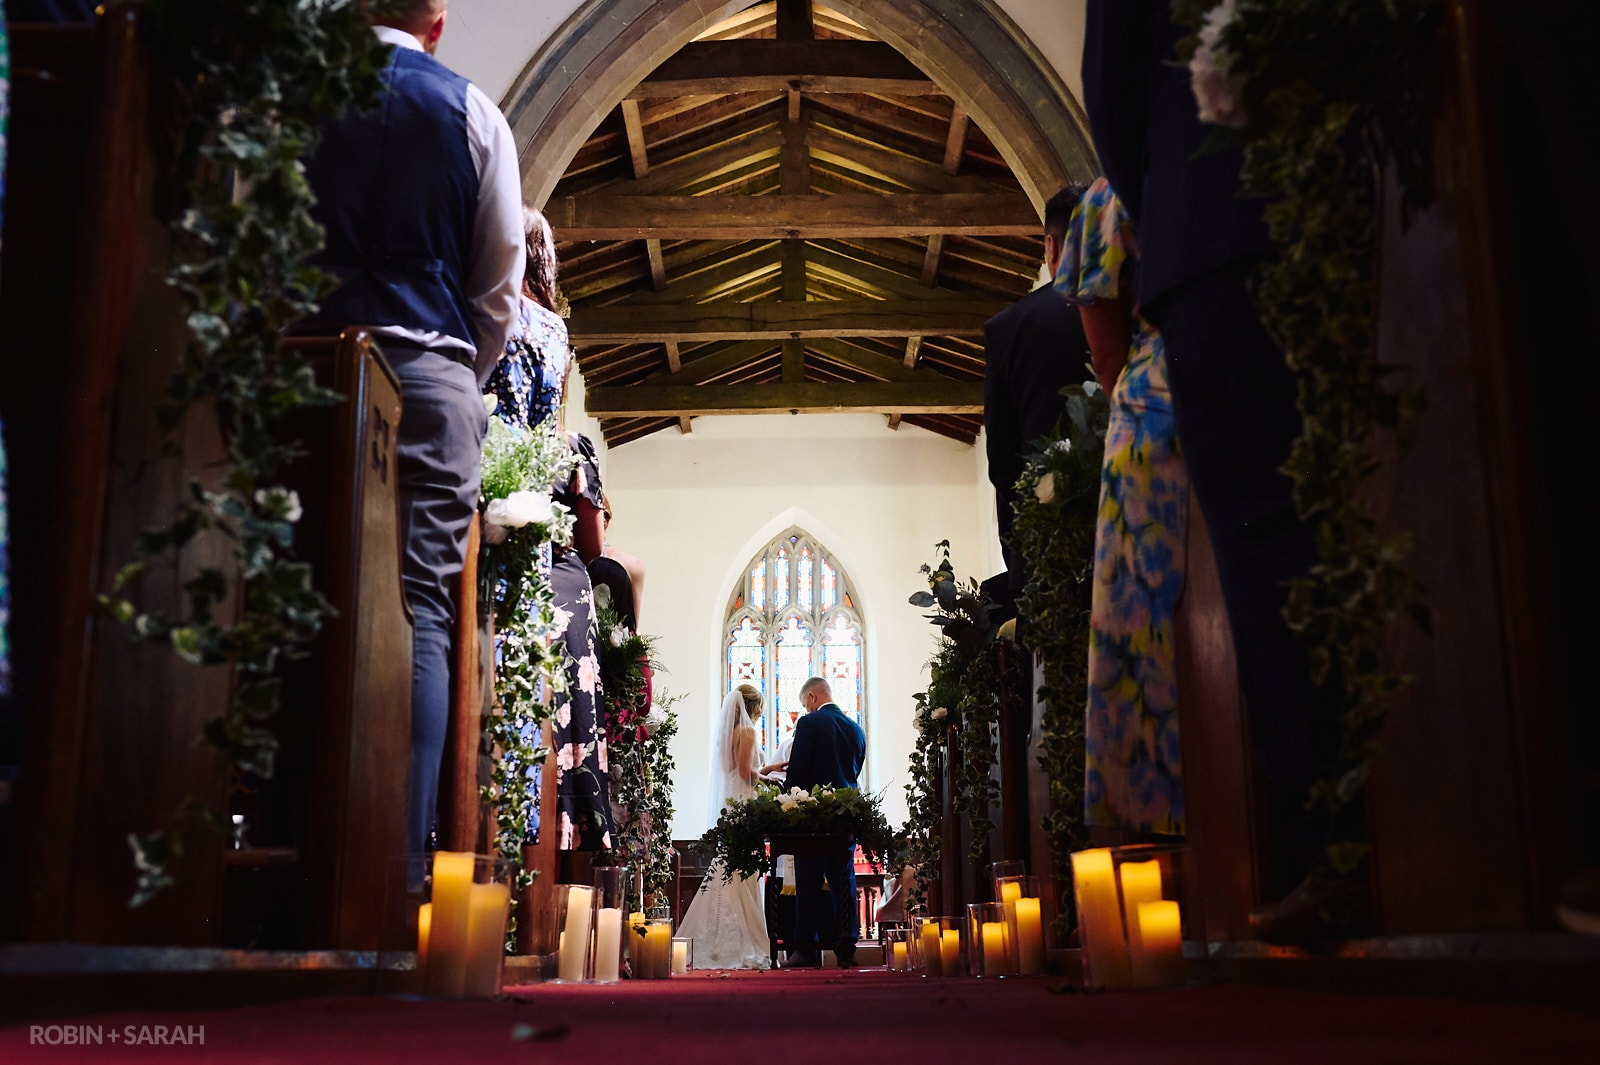 Wedding ring exchange at St Botolph's church Newbold-on-Avon